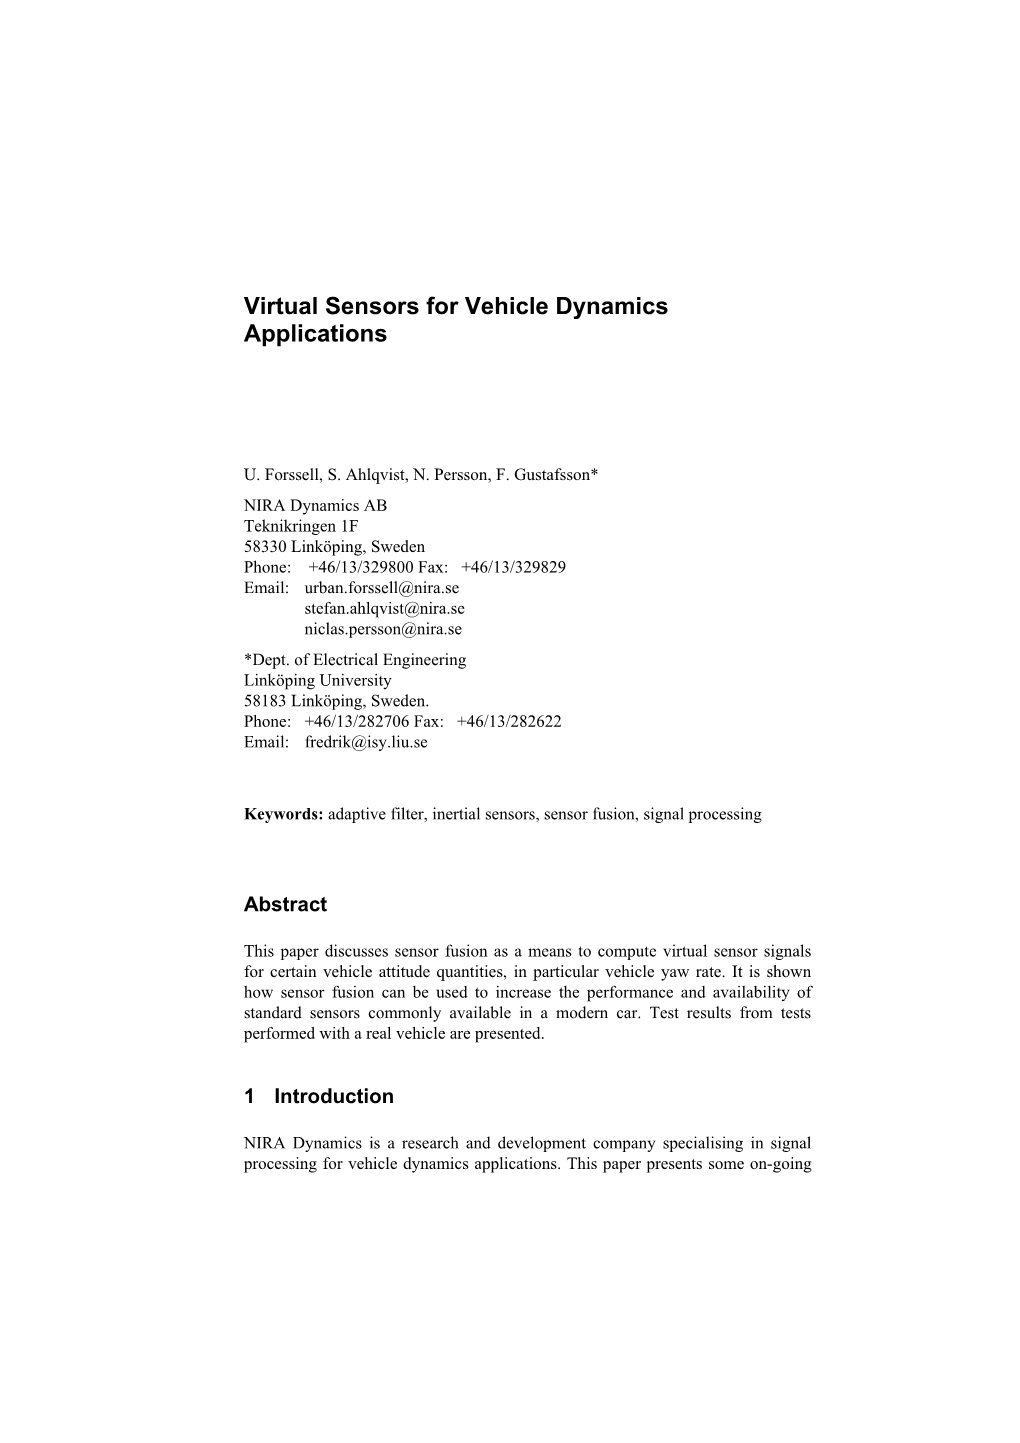 Virtual Sensors for Vehicle Dynamics Applications